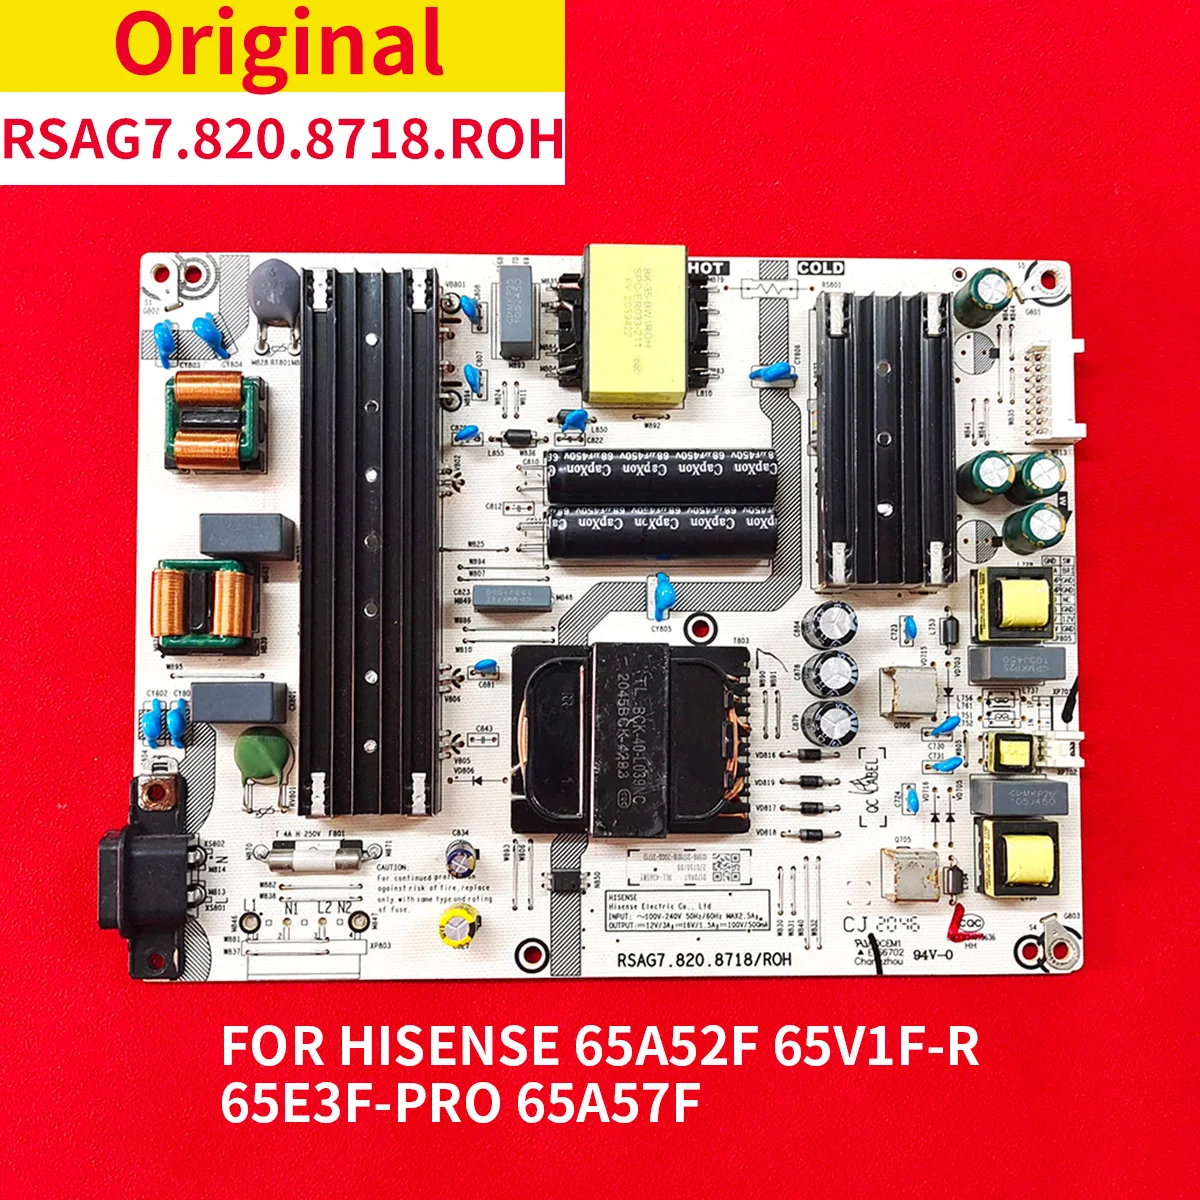 Original RSAG7.820.8718.ROH Power Supply Board for Hisense 65A52F 65V1F-R 65E3F-PRO 65A57F screen HLL-4365WY